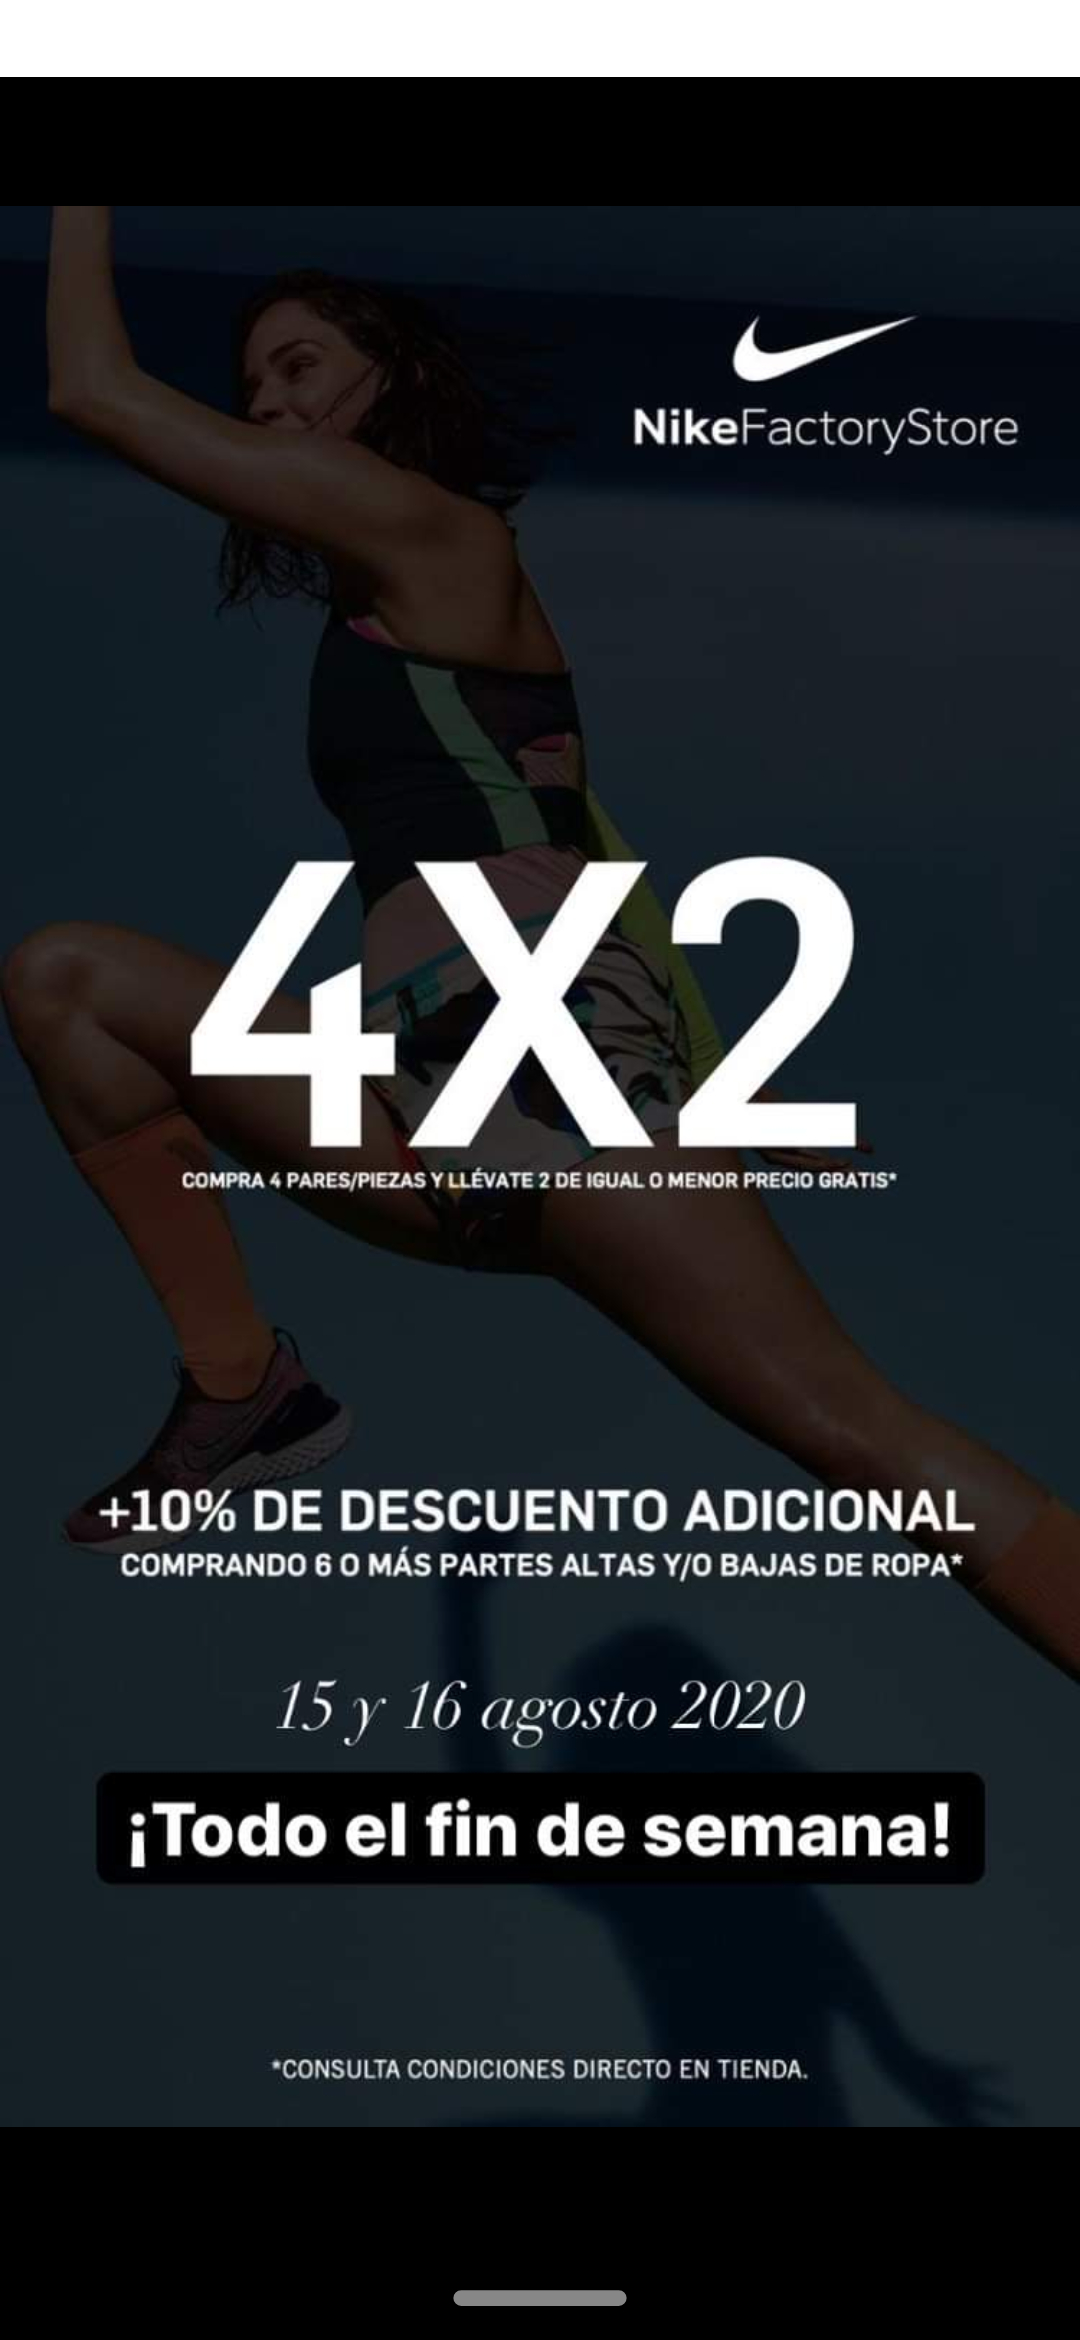 Nike Factory Store: 4*2 - promodescuentos.com